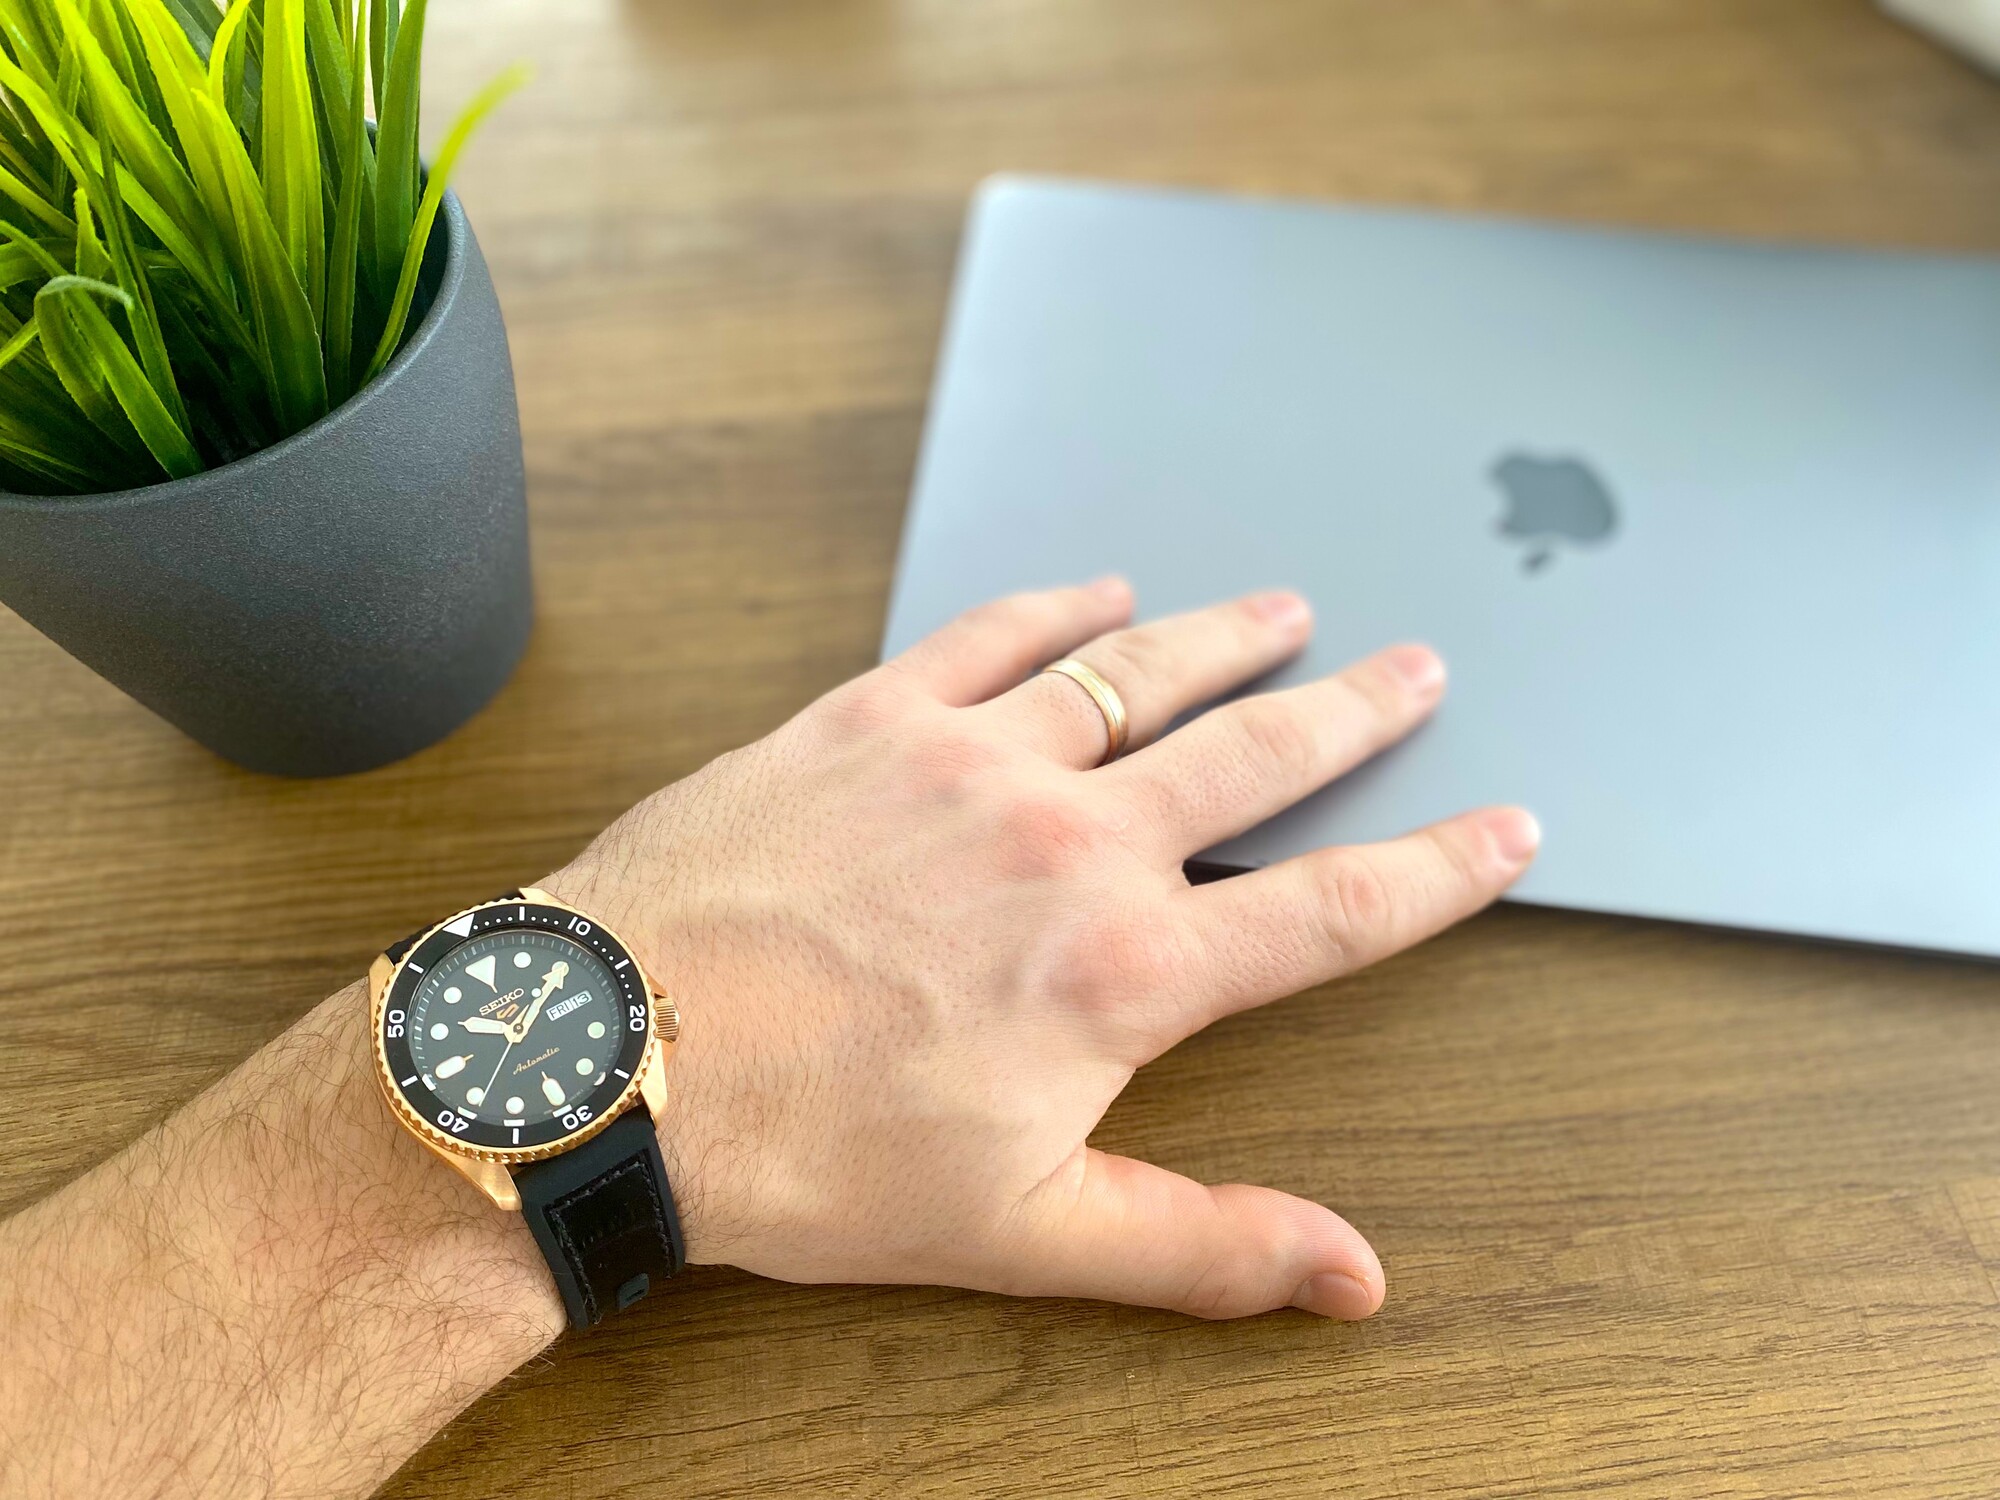 A dark-toned watch next to Macbook Air